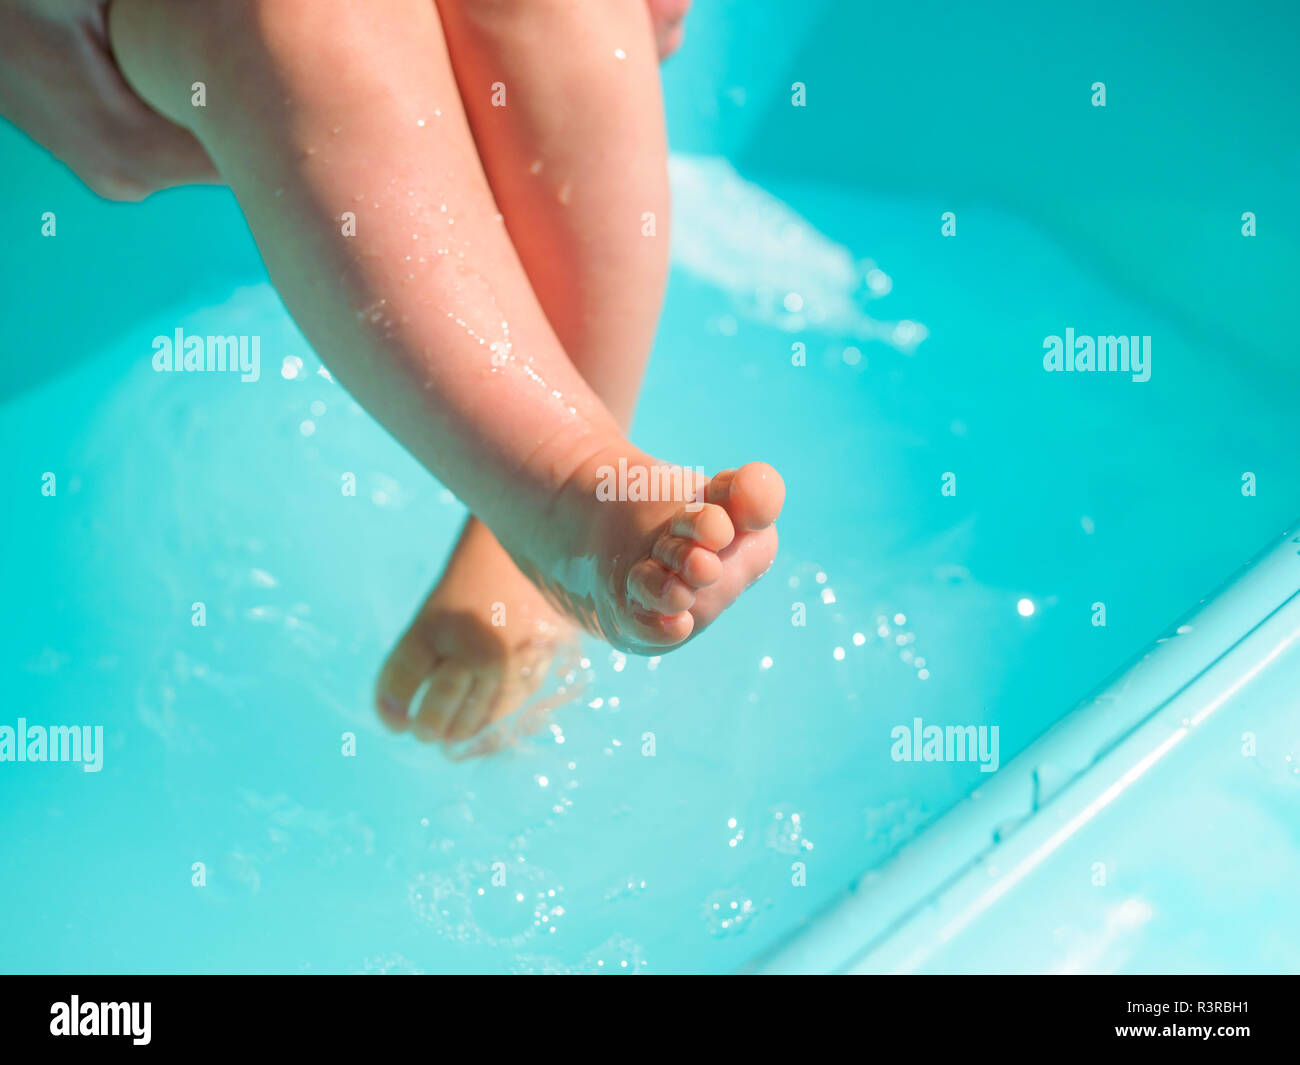 Wet legs of baby girl Stock Photo - Alamy